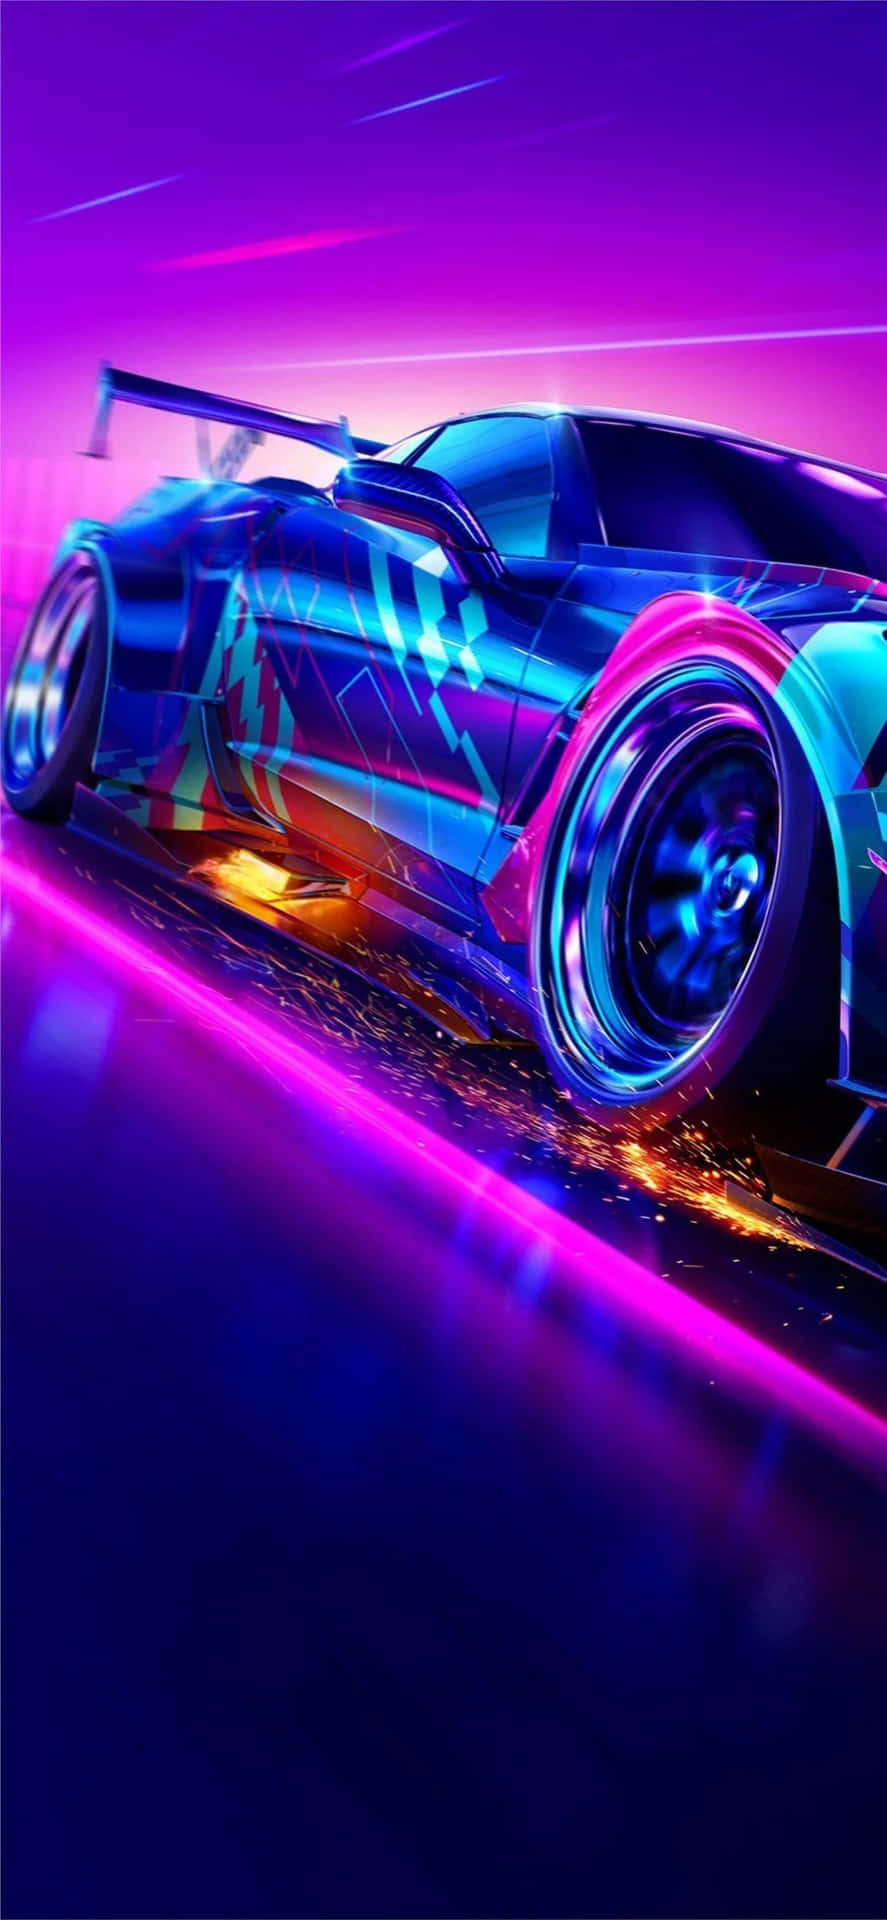 Neon Speed Racer.jpg Wallpaper